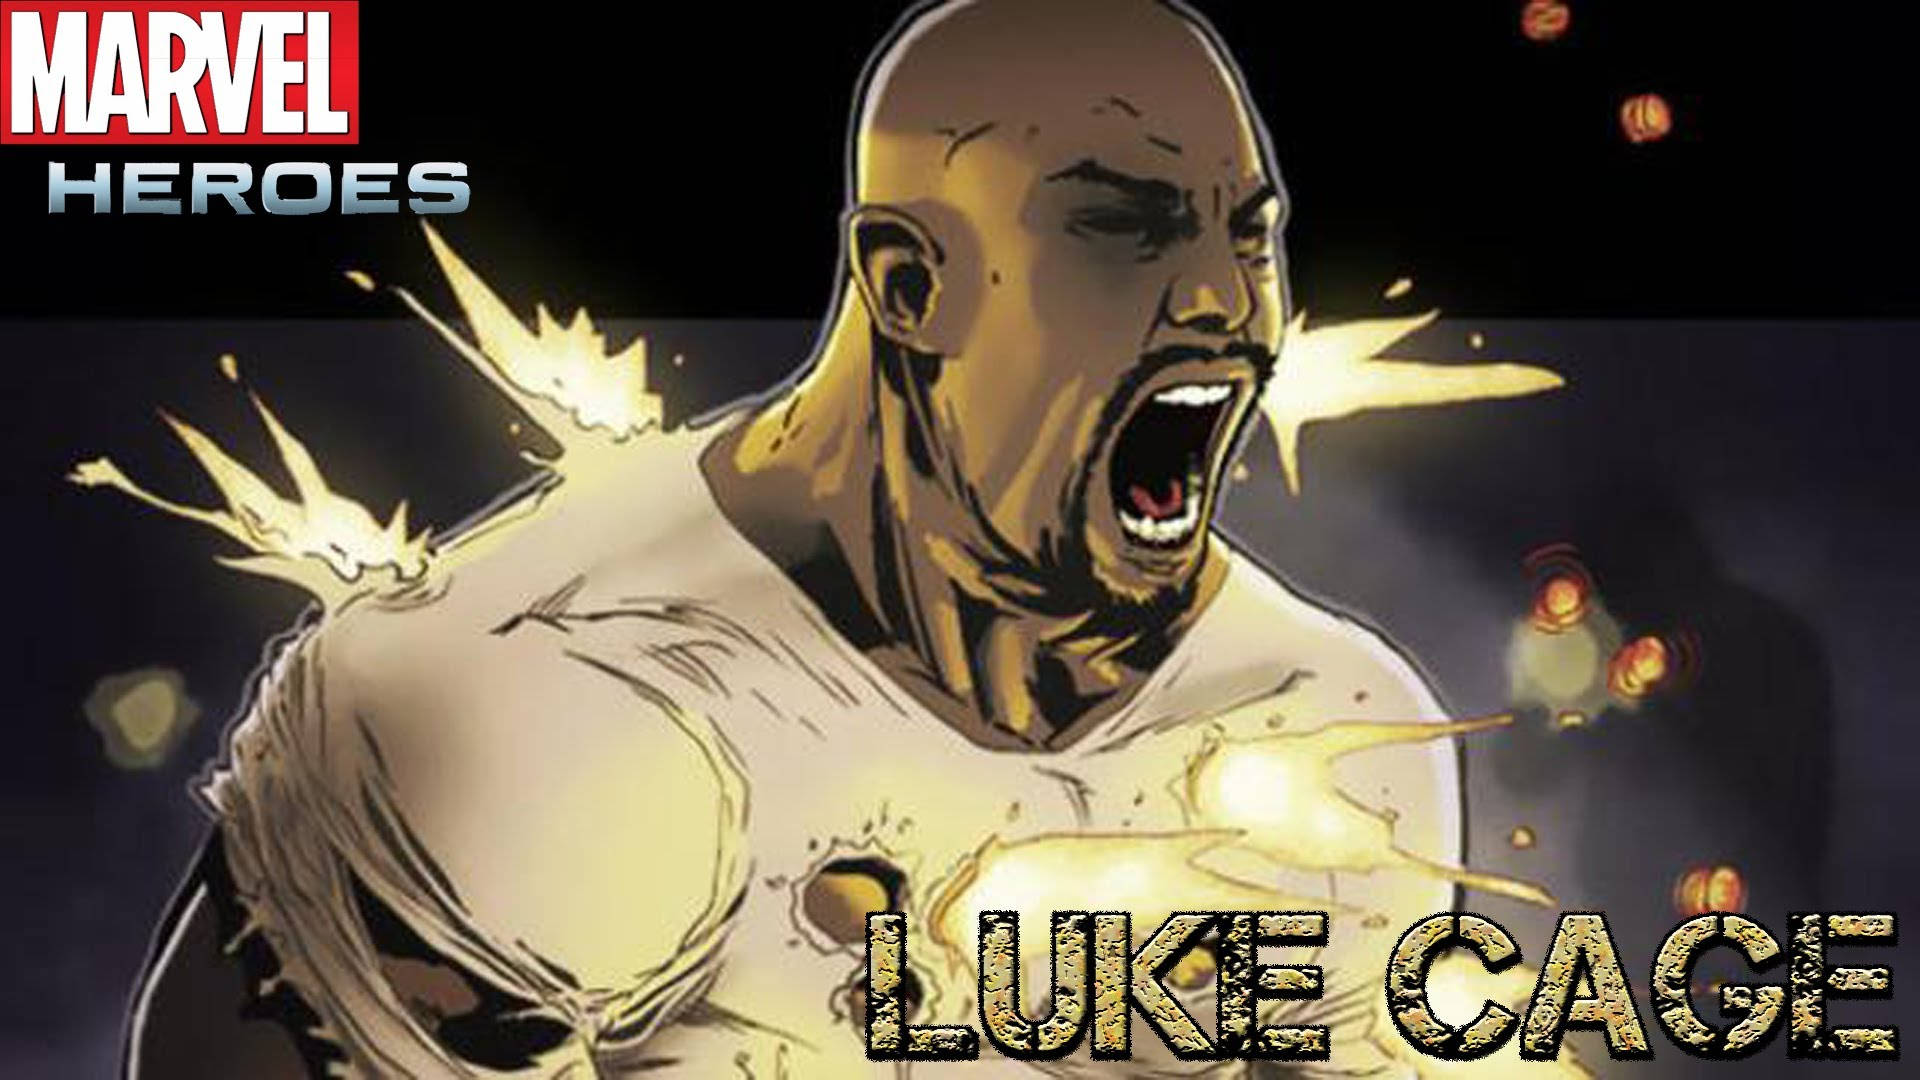 Download Comic Book Art Hype Luke Cage Wallpaper 